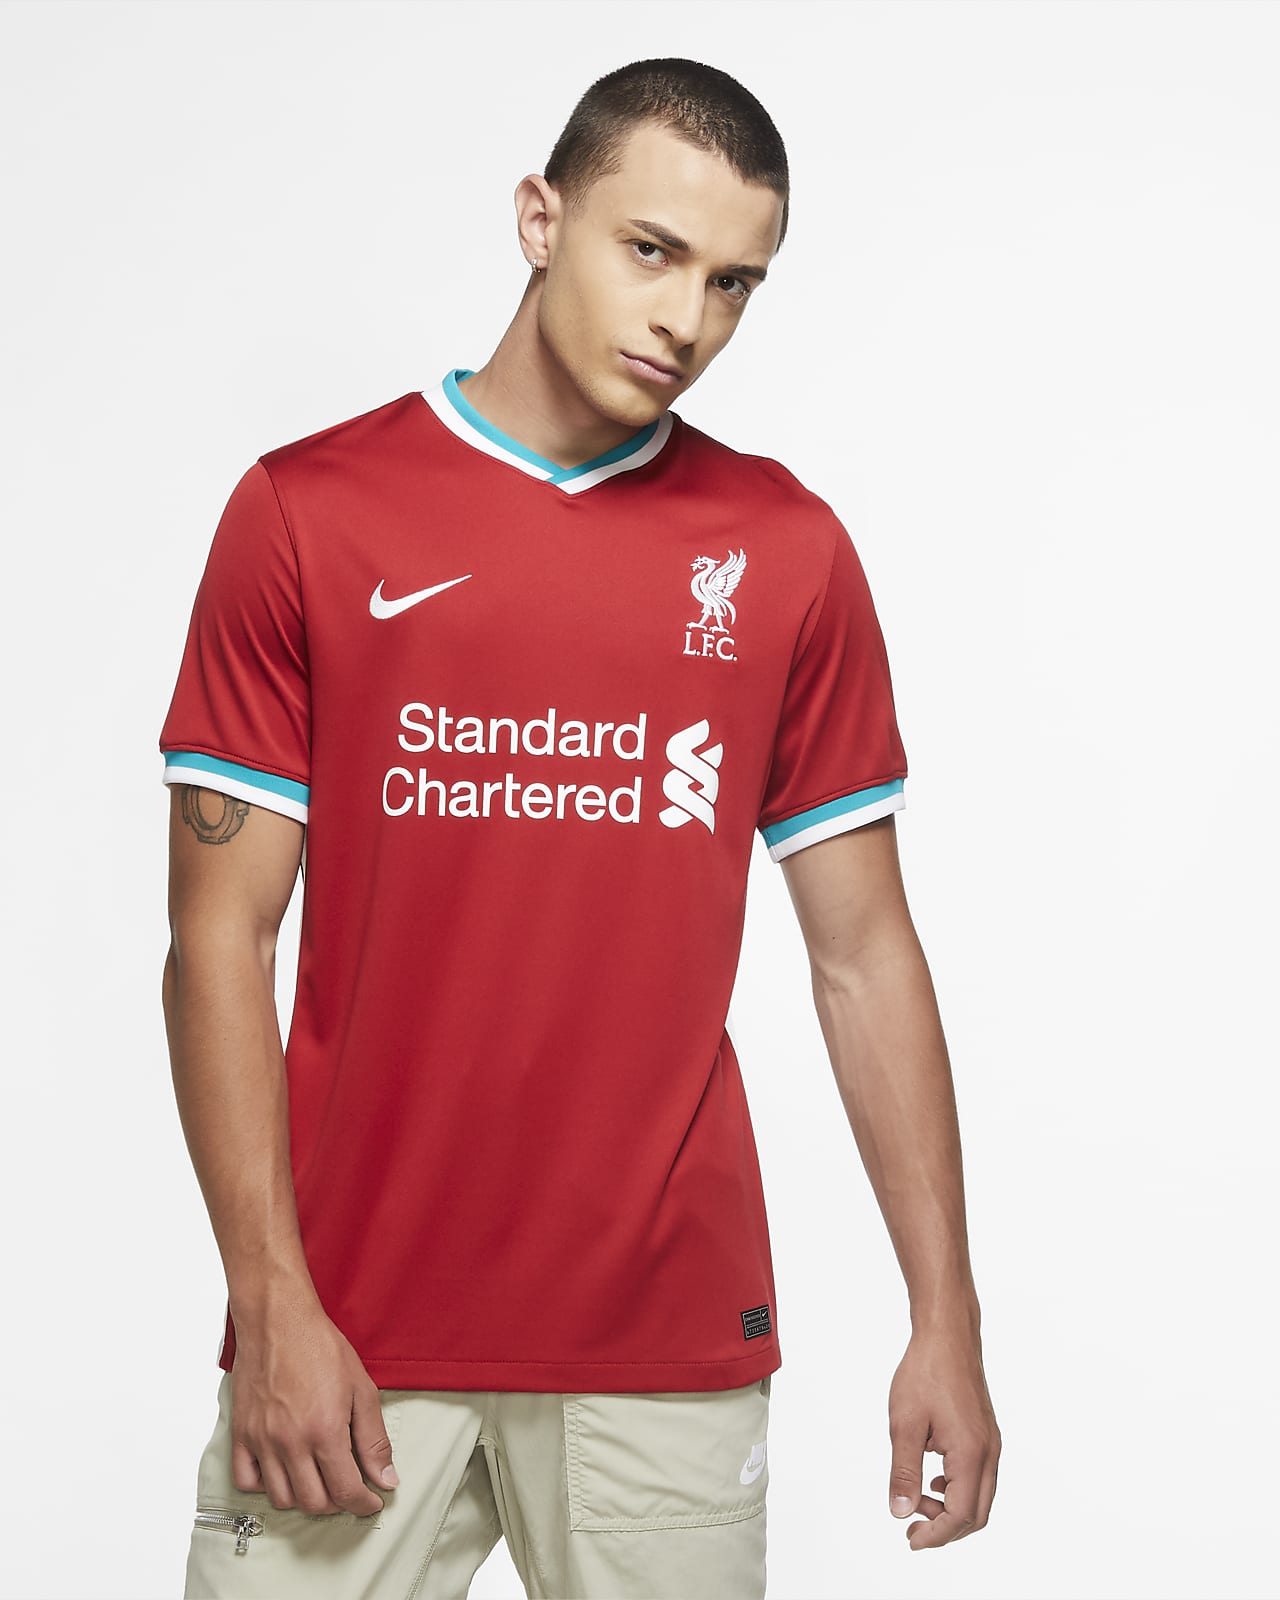 Nueva Camiseta Del Liverpool 2020 Italy, - mpgc.net